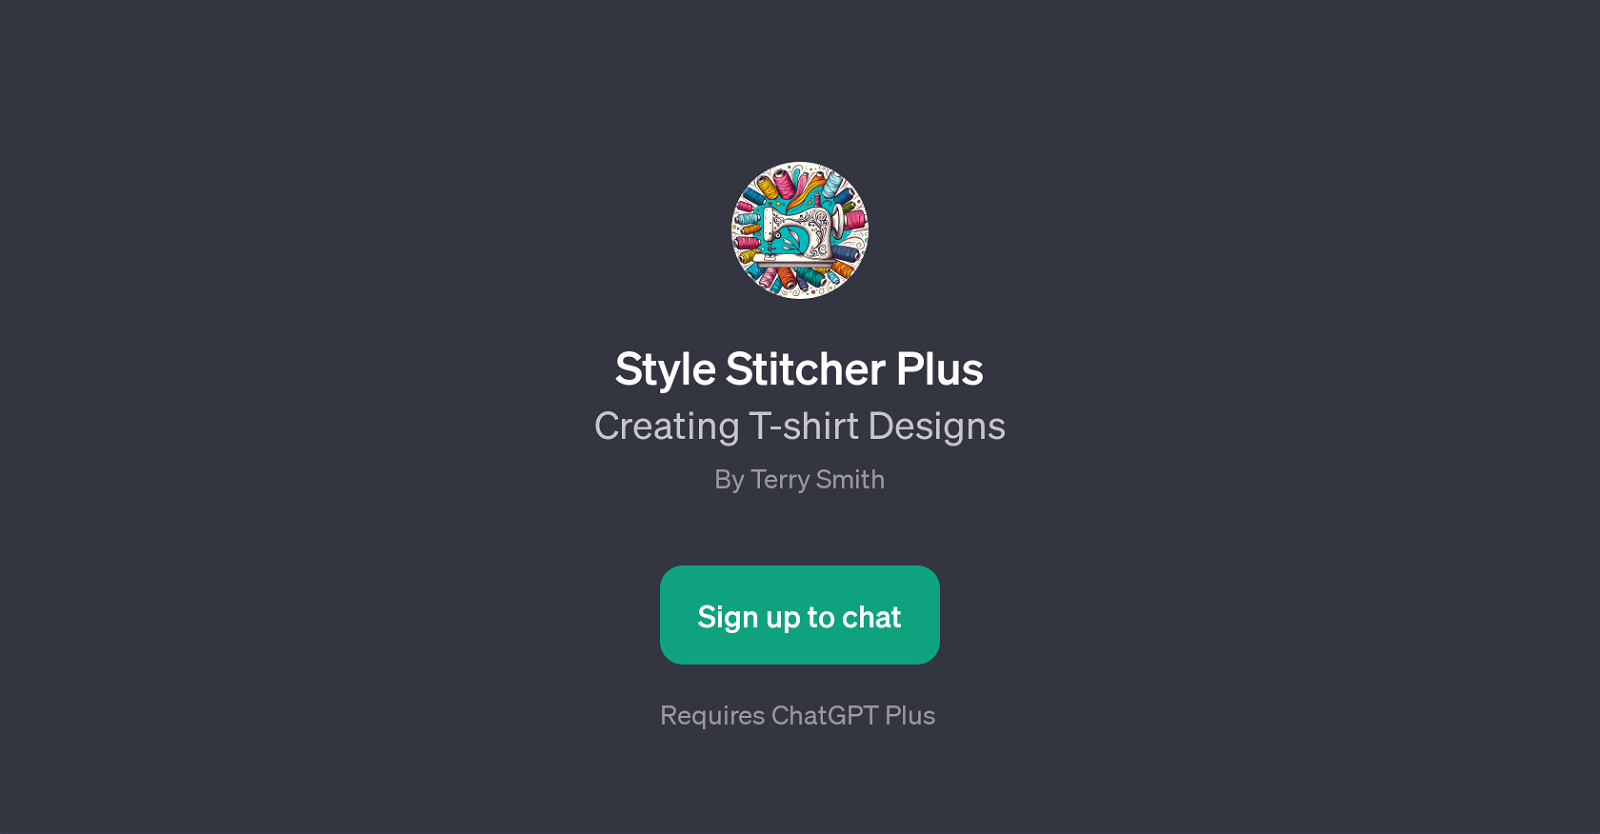 Style Stitcher Plus website